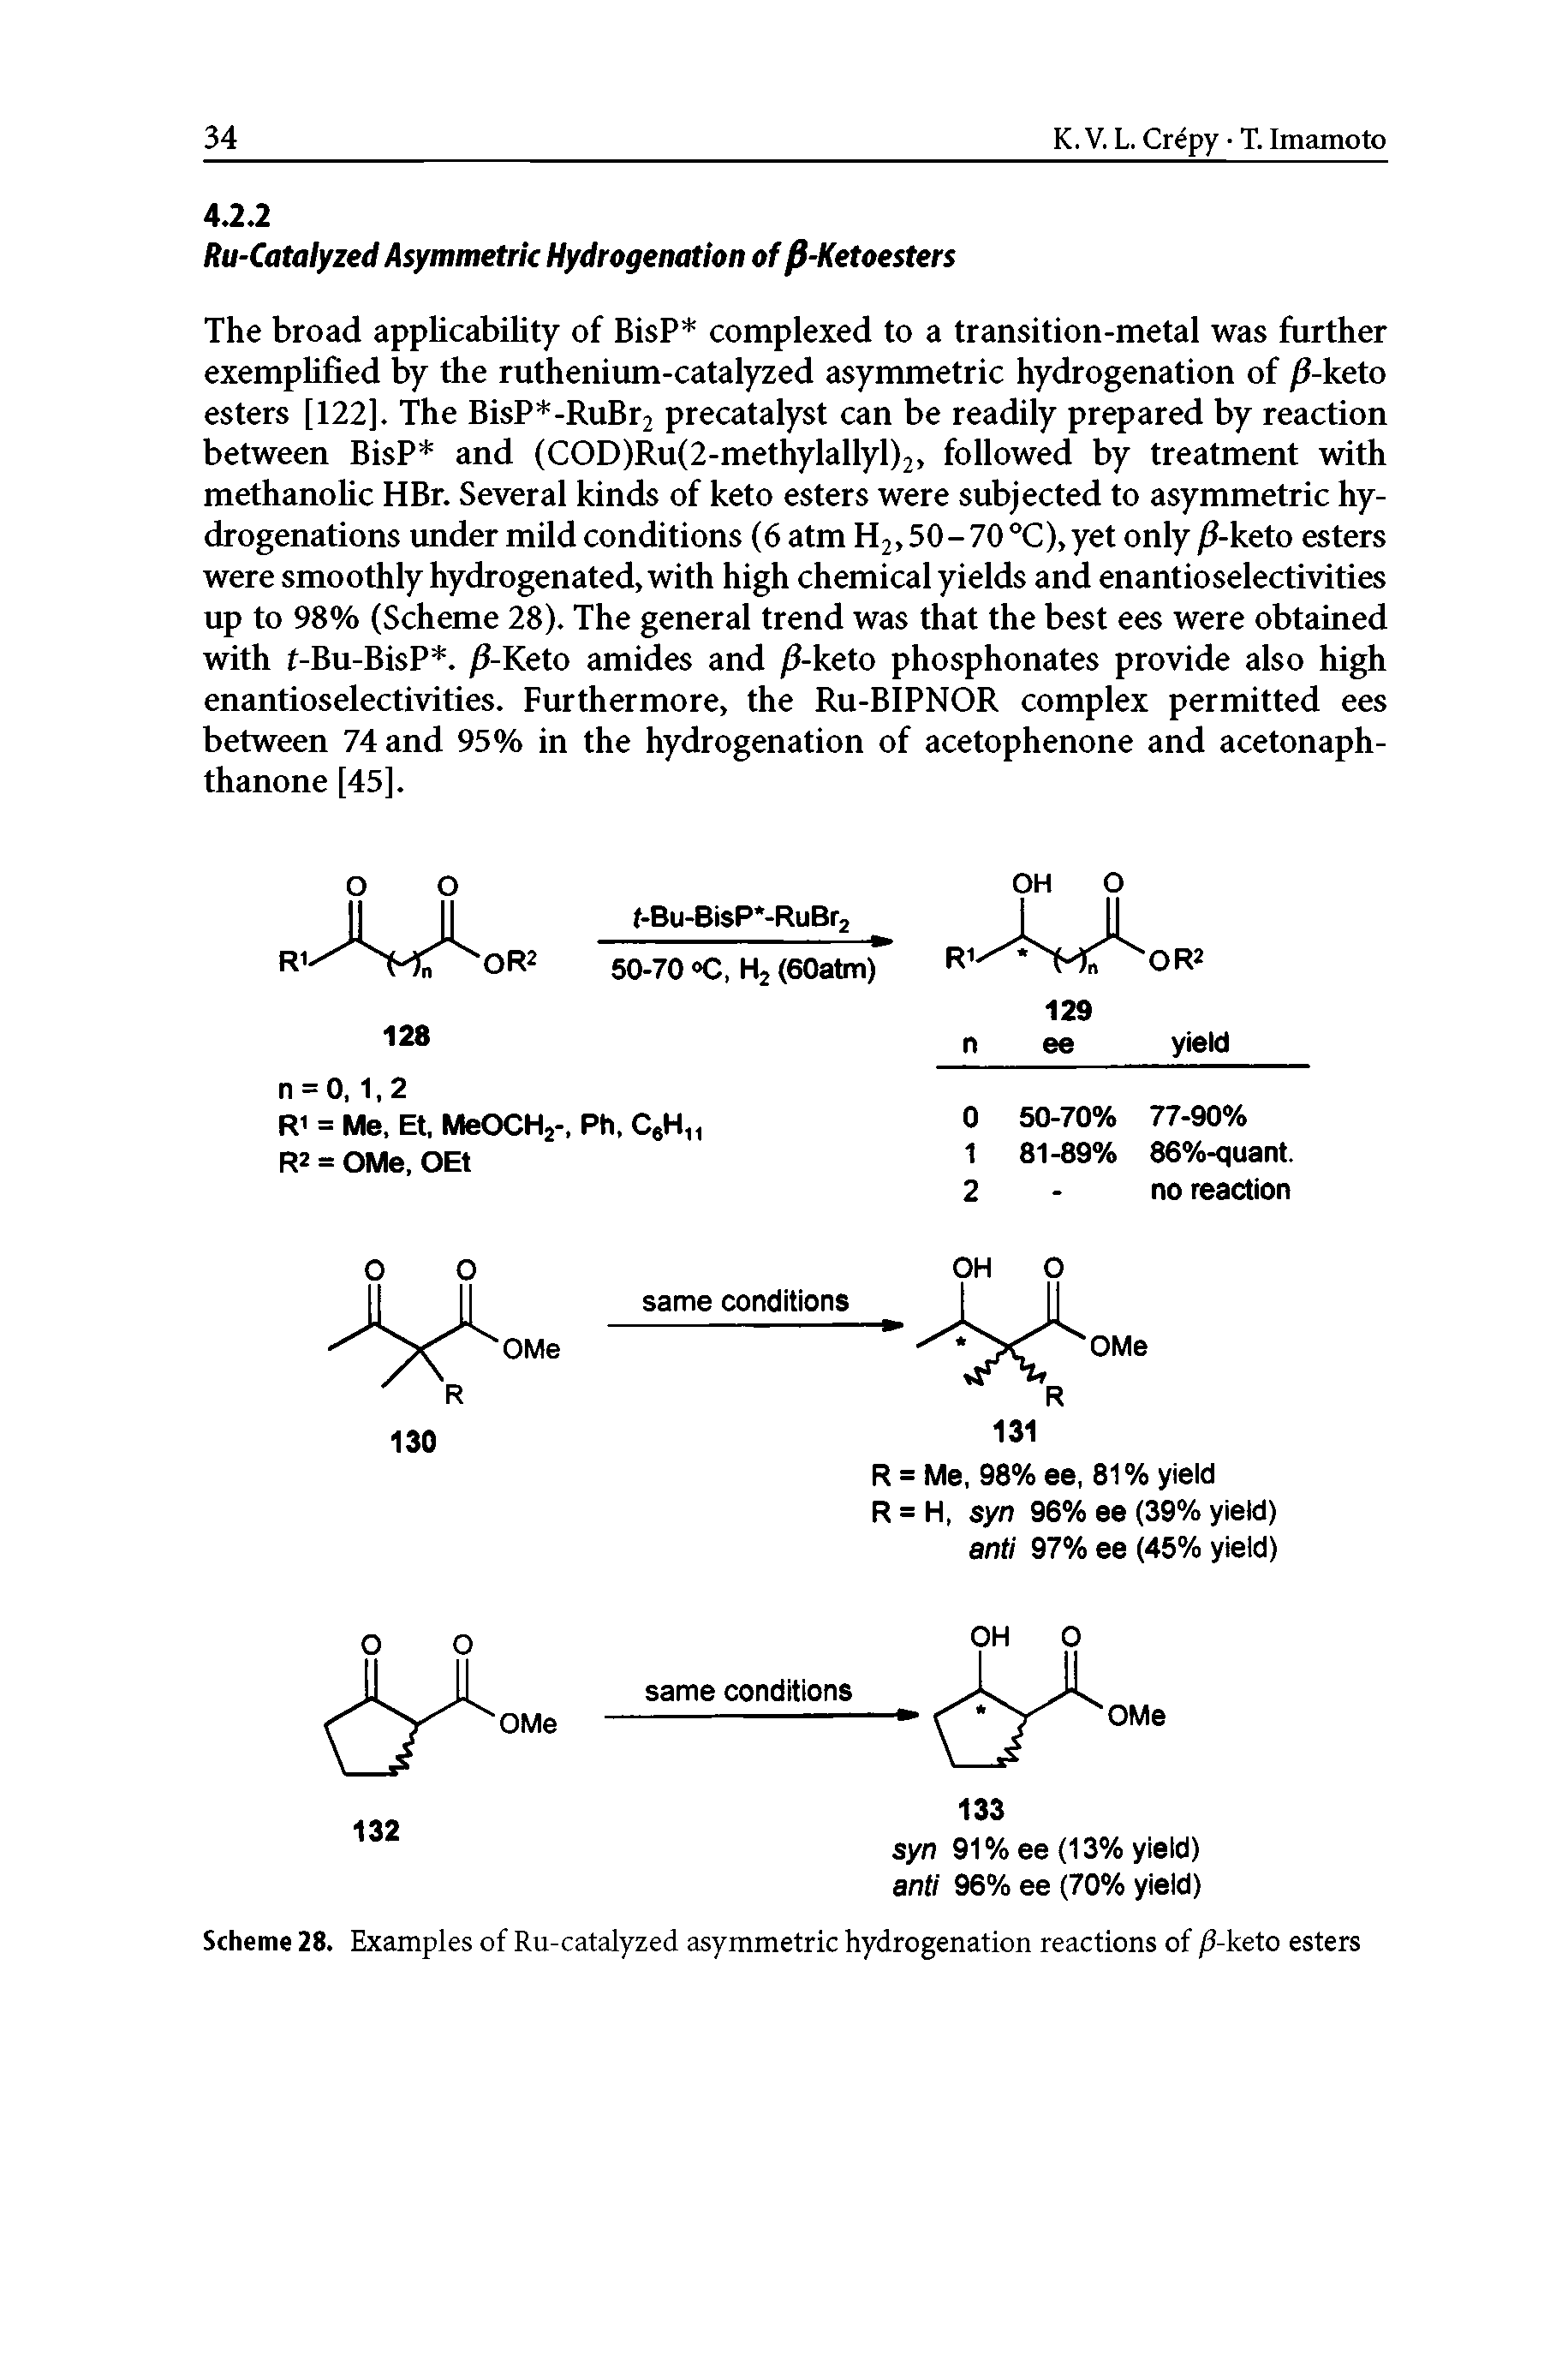 Scheme 28. Examples of Ru-catalyzed asymmetric hydrogenation reactions of /i-keto esters...